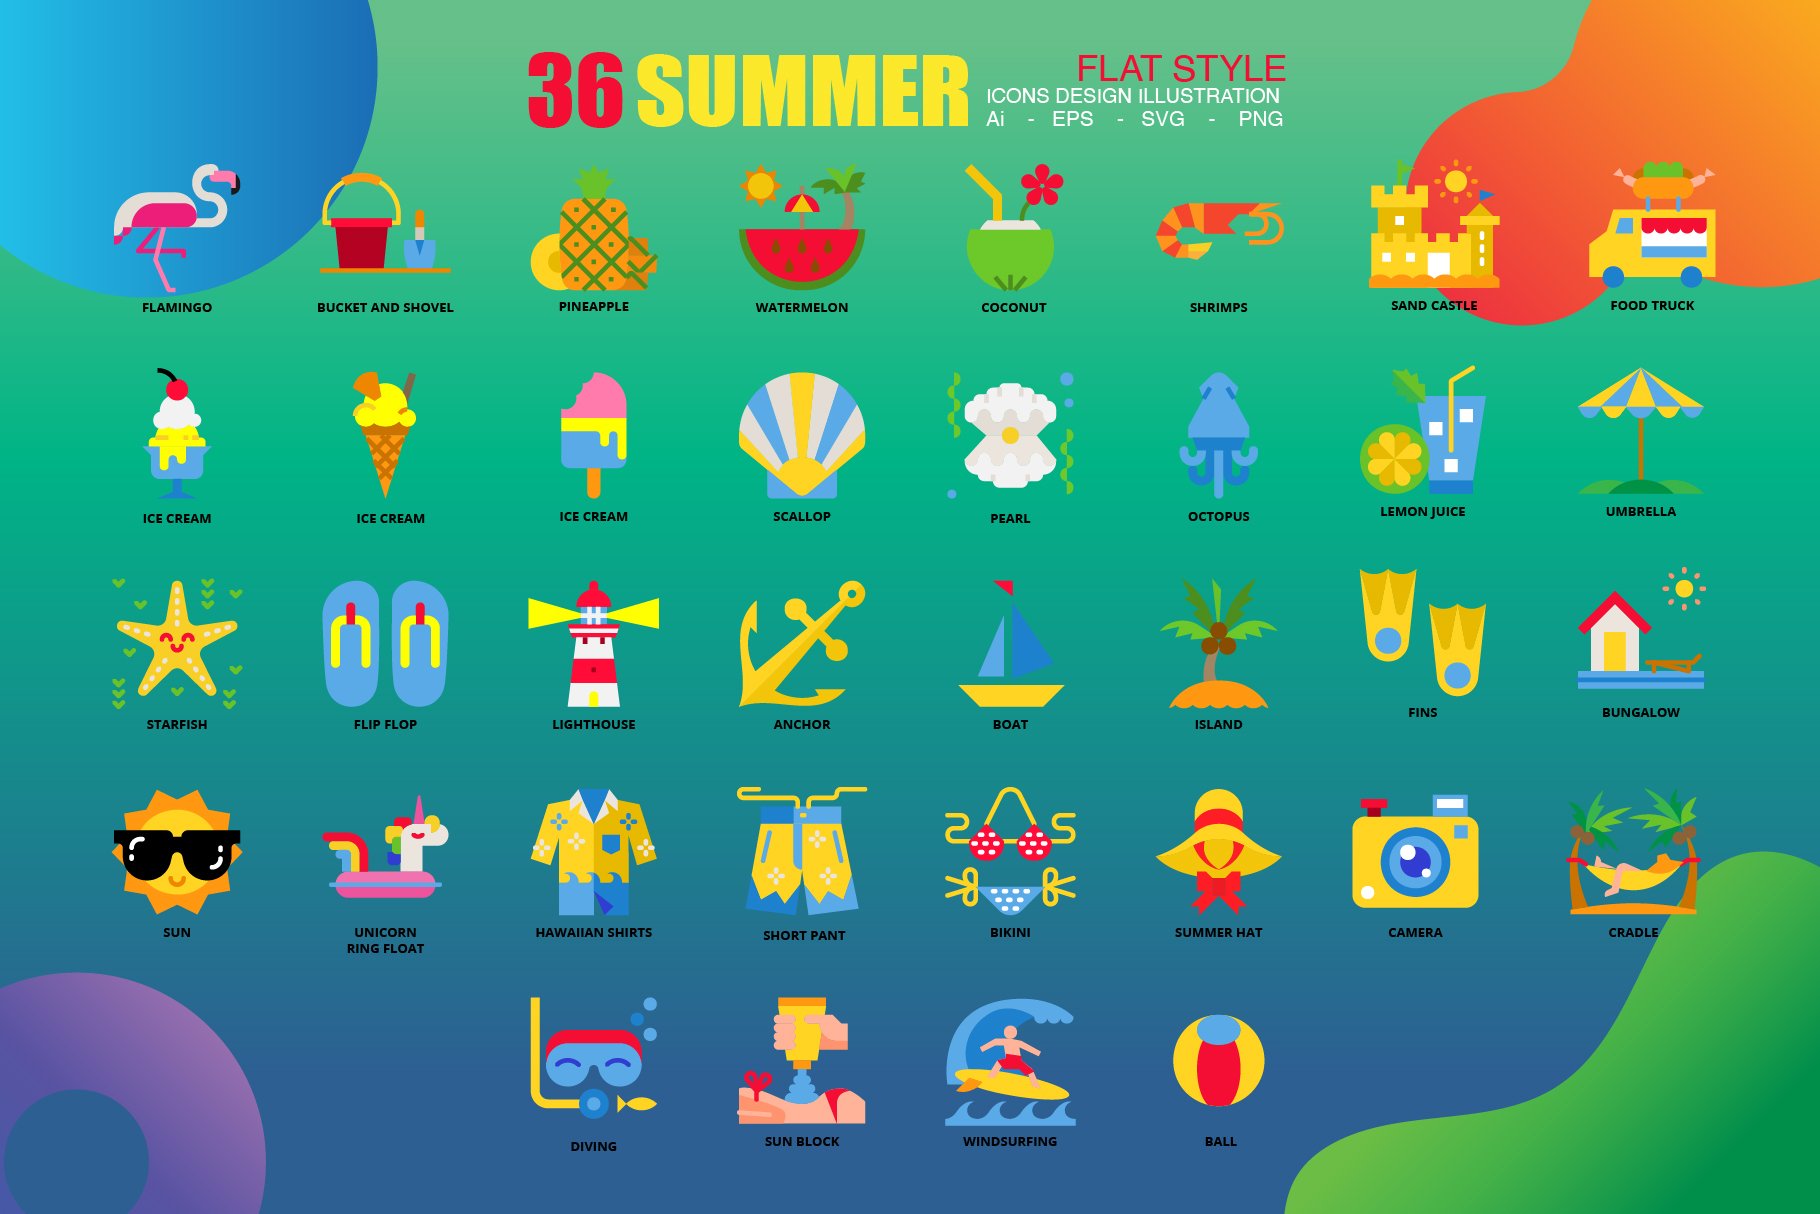 36 Summer icons set 3 style+1 Bonus preview image.